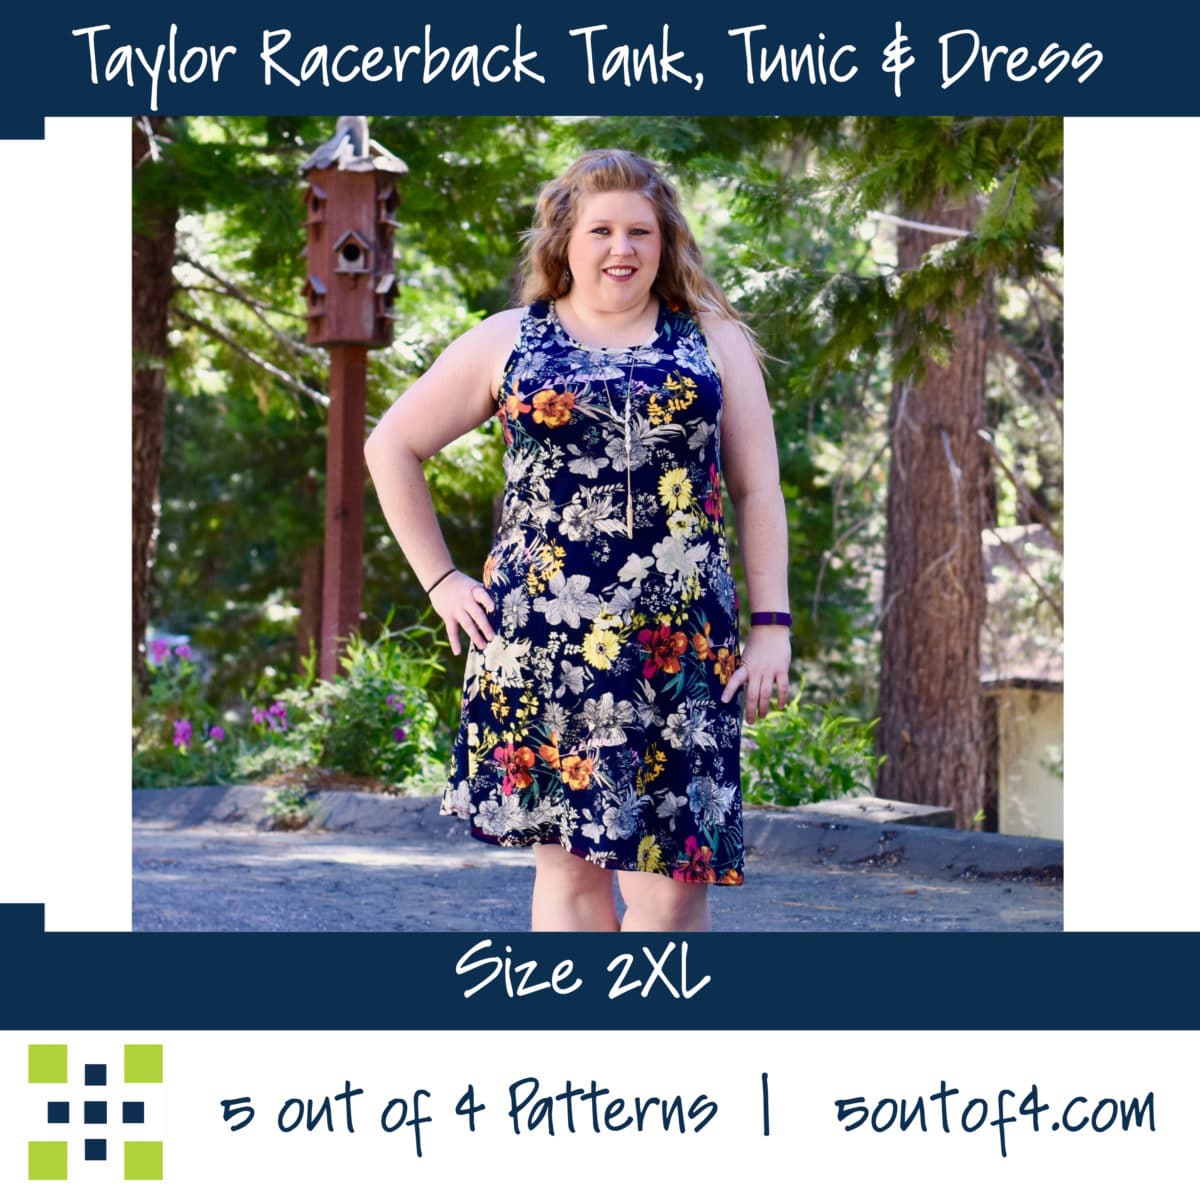 Taylor Racerback a-line dress